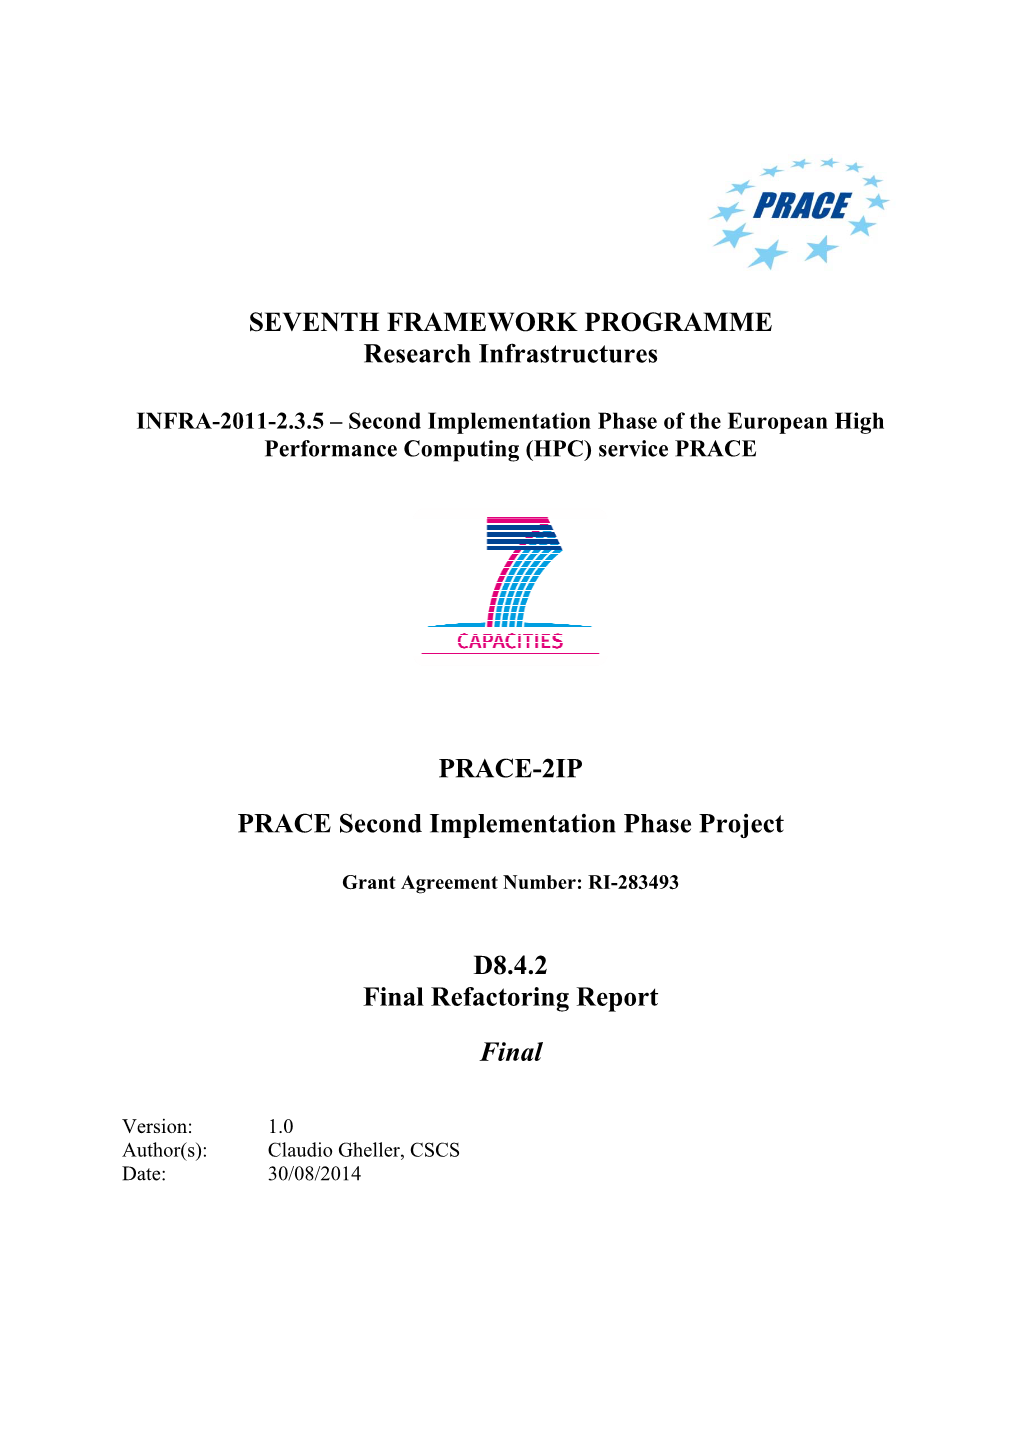 D8.4.2 Final Refactoring Report